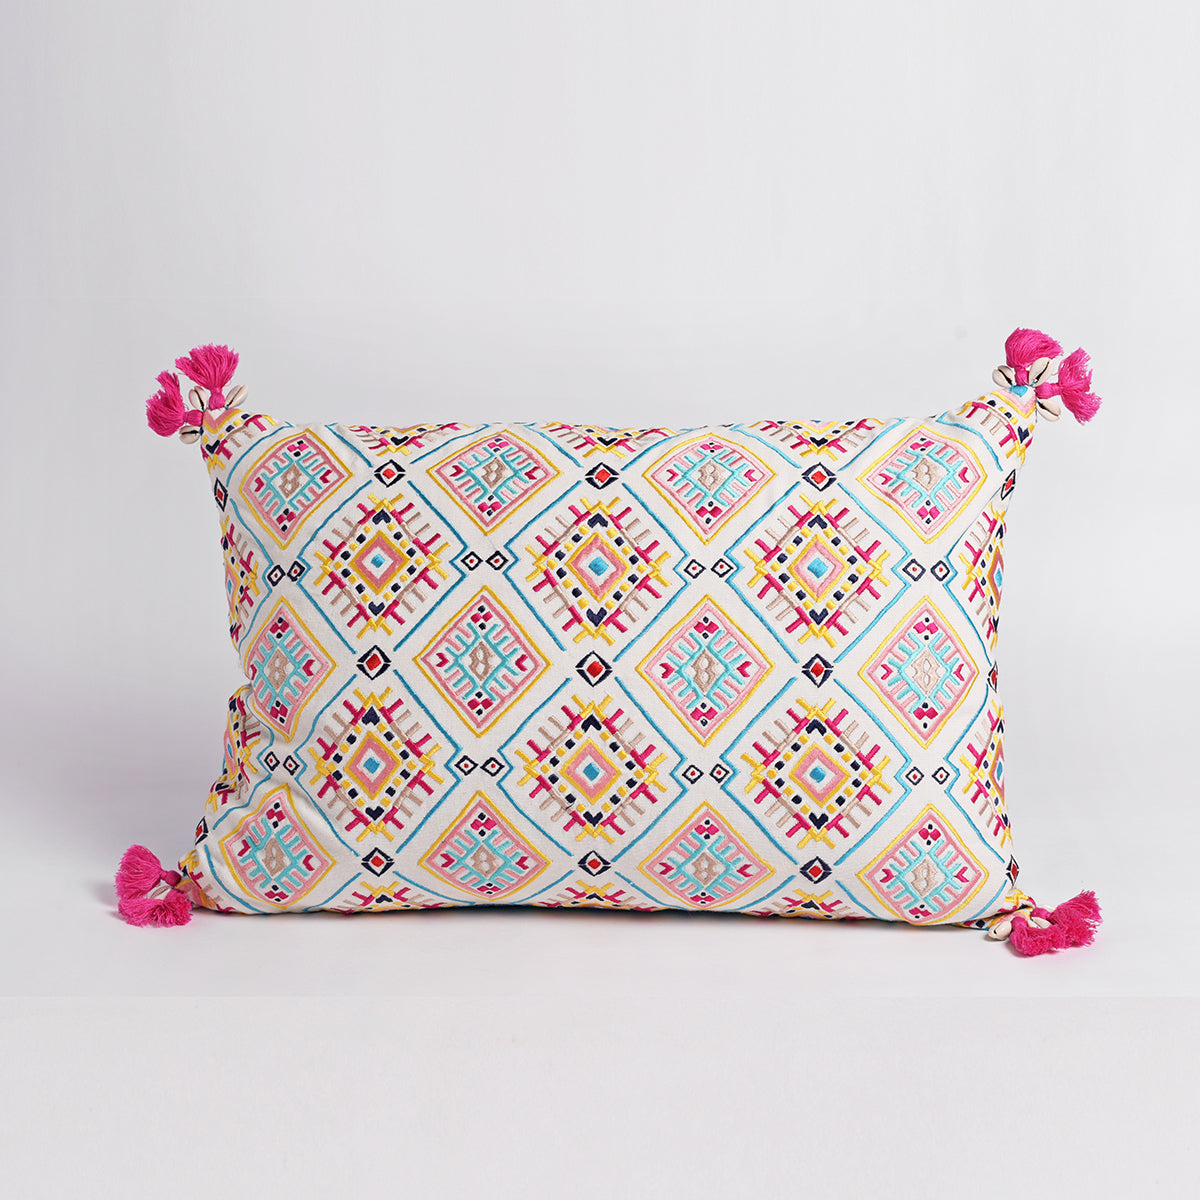 Banjara - Embroidered, multicolored, Peruvian cushion cover